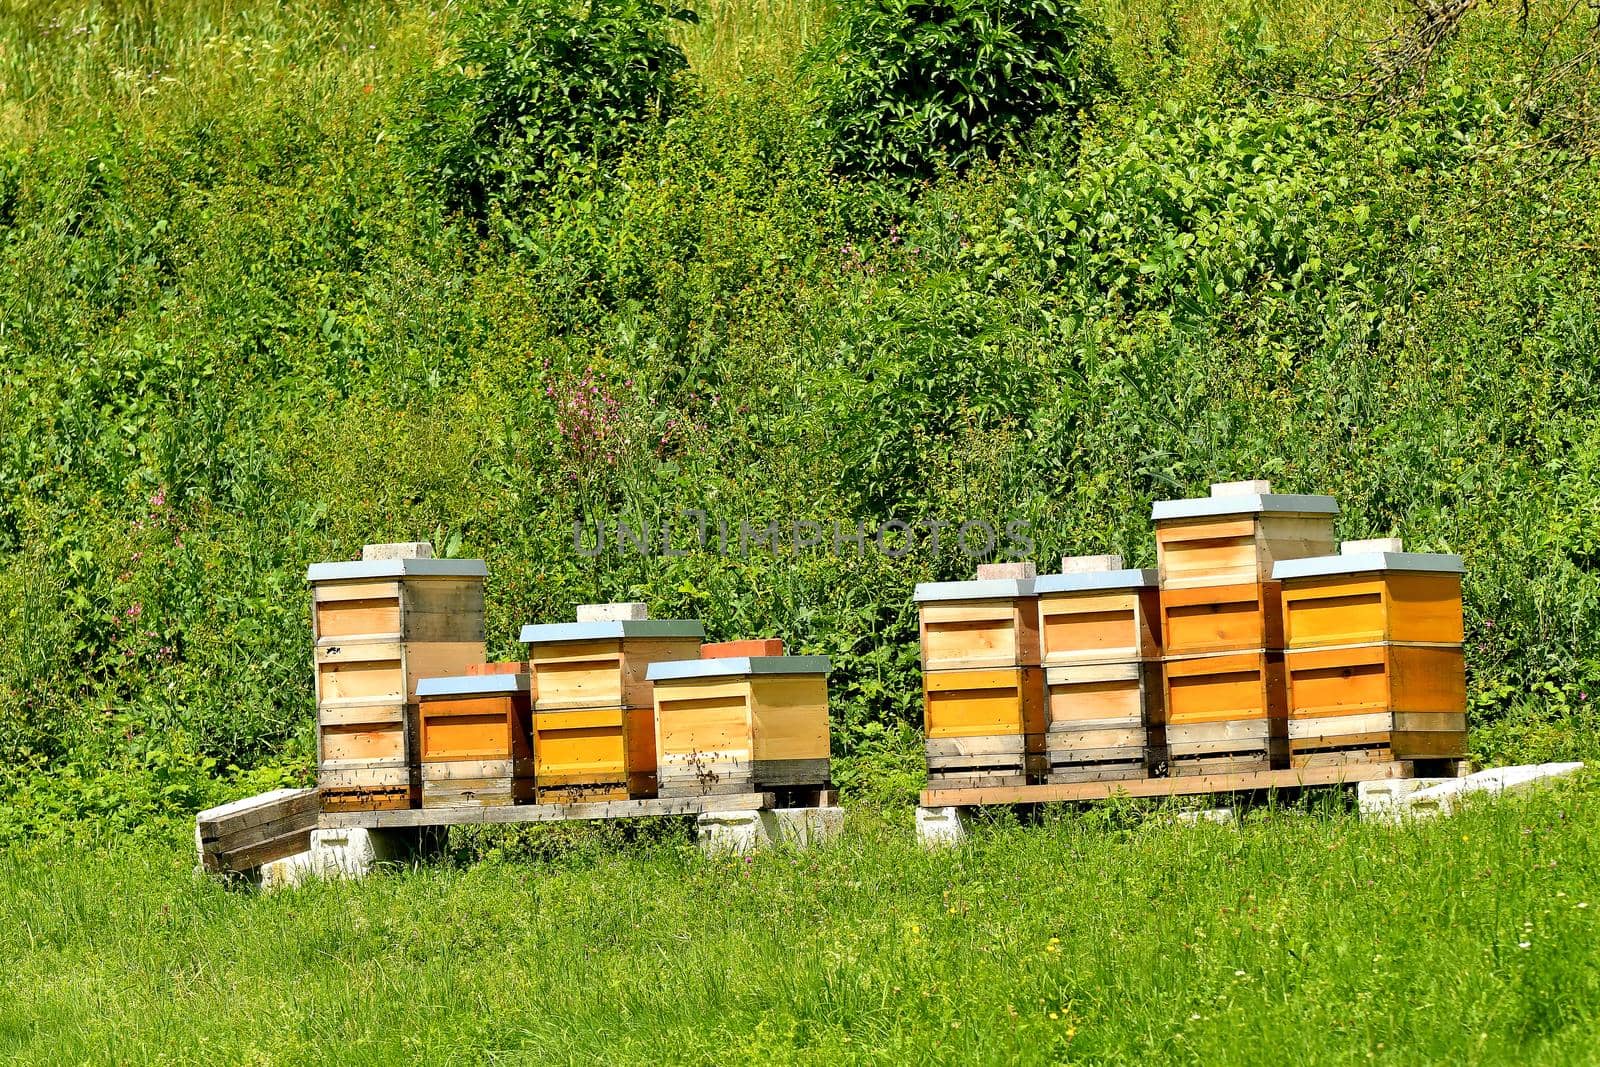 beehives in a meadow in summertime in Germany